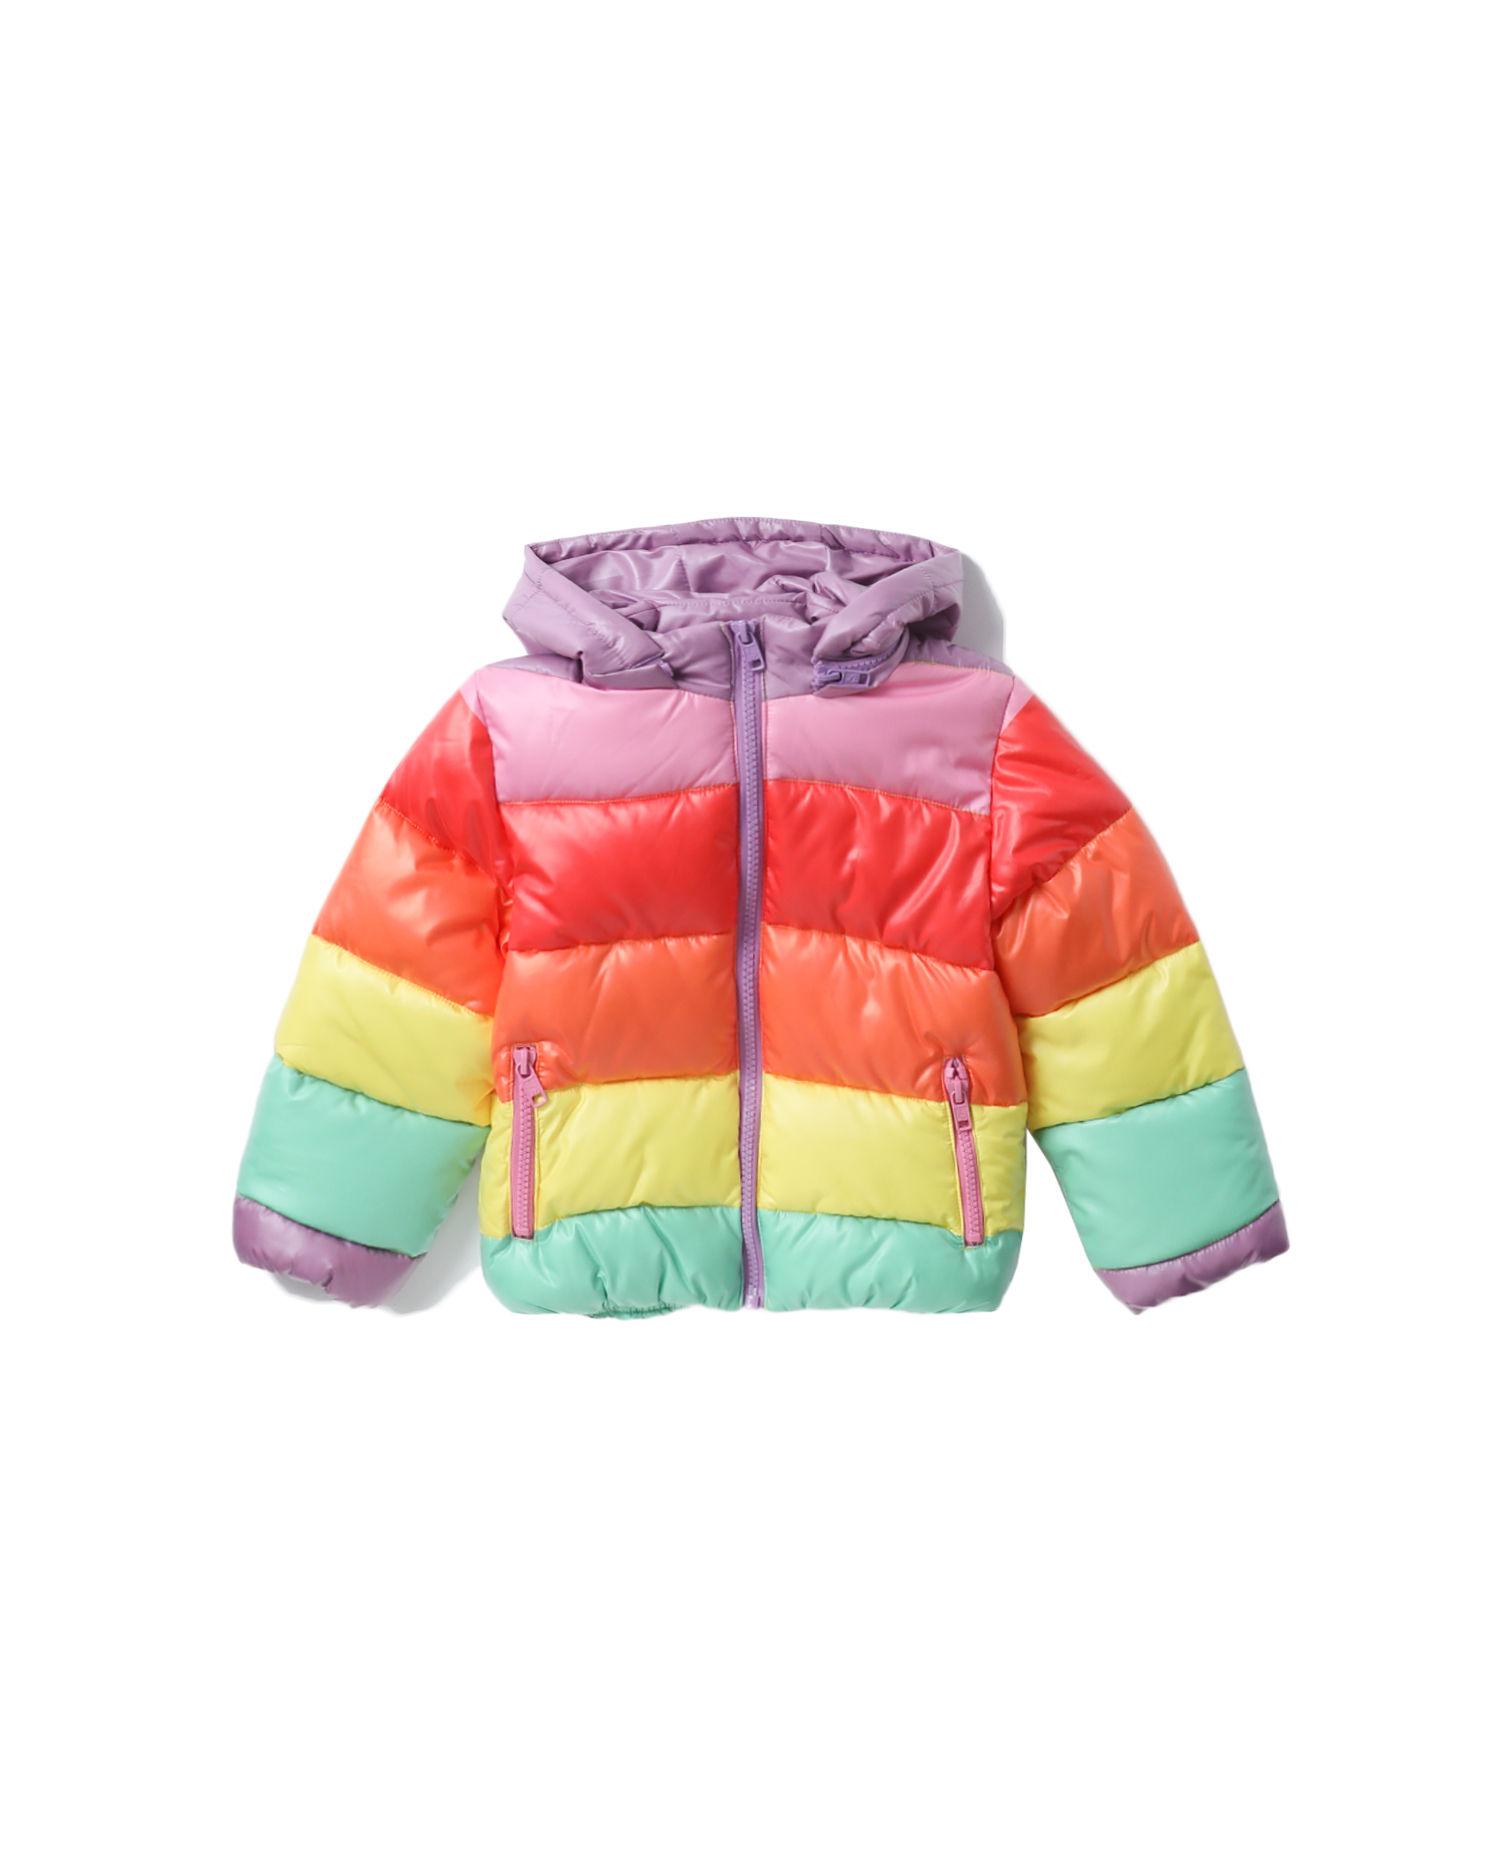 Rainbow striped puffer jacket by STELLA MCCARTNEY